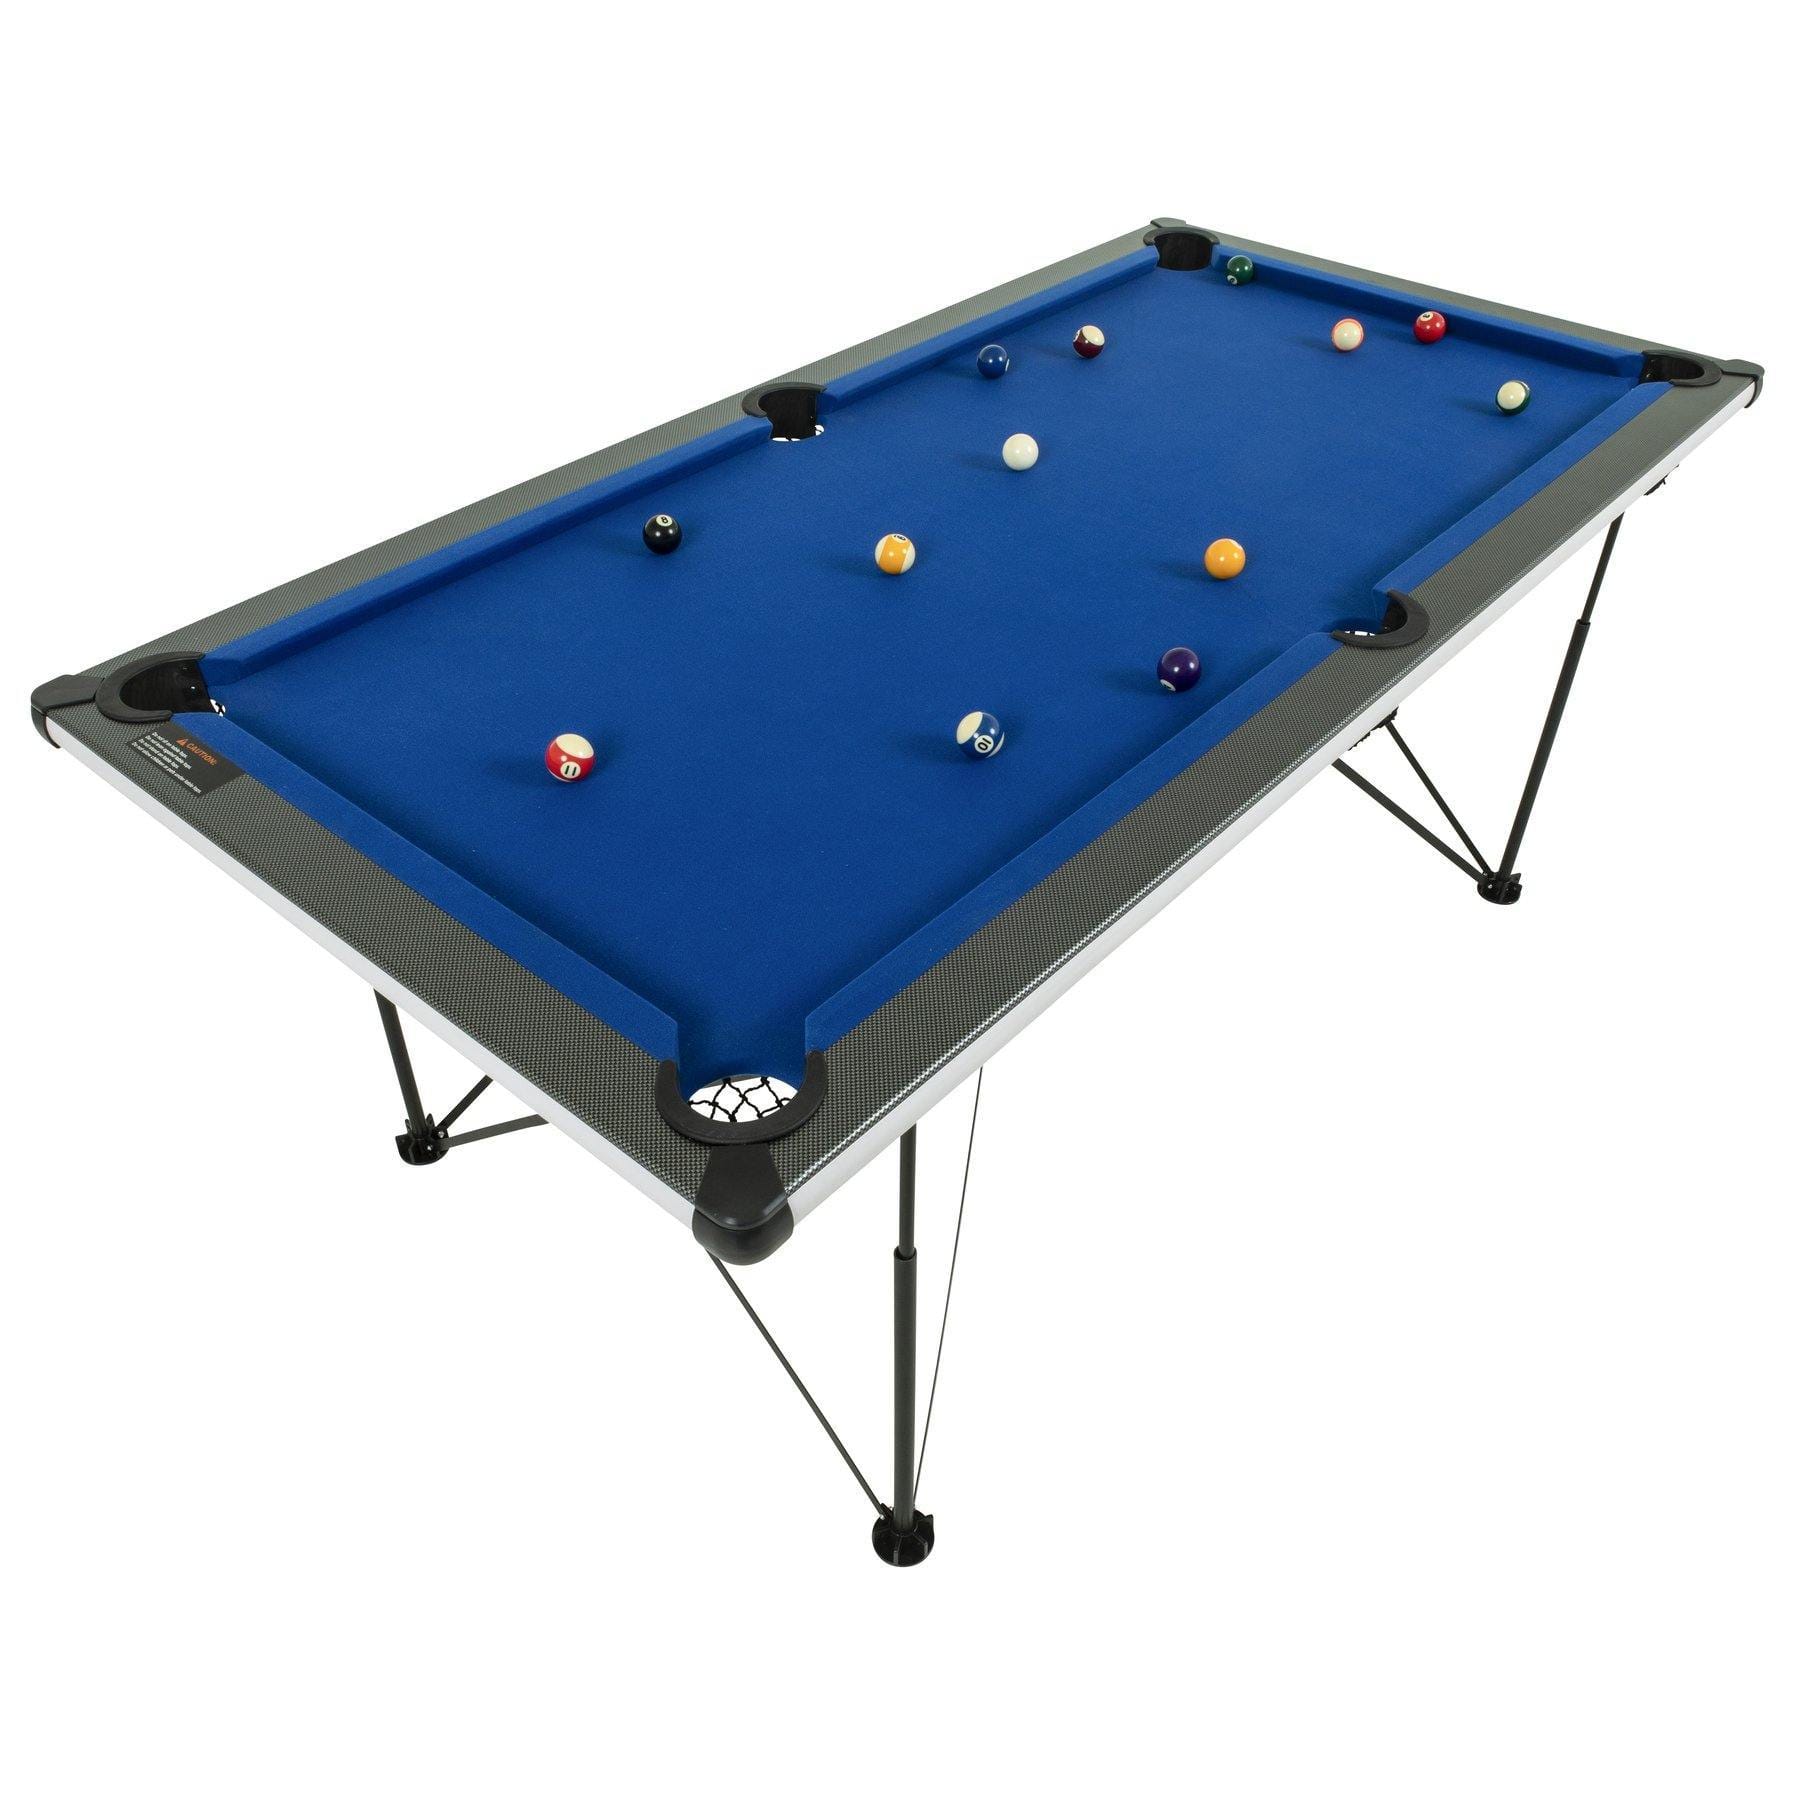 Triumph Gameroom TRIUMPH - 6’ Portable Pop Up Folding Pool/Billiard Table - 45-6051W